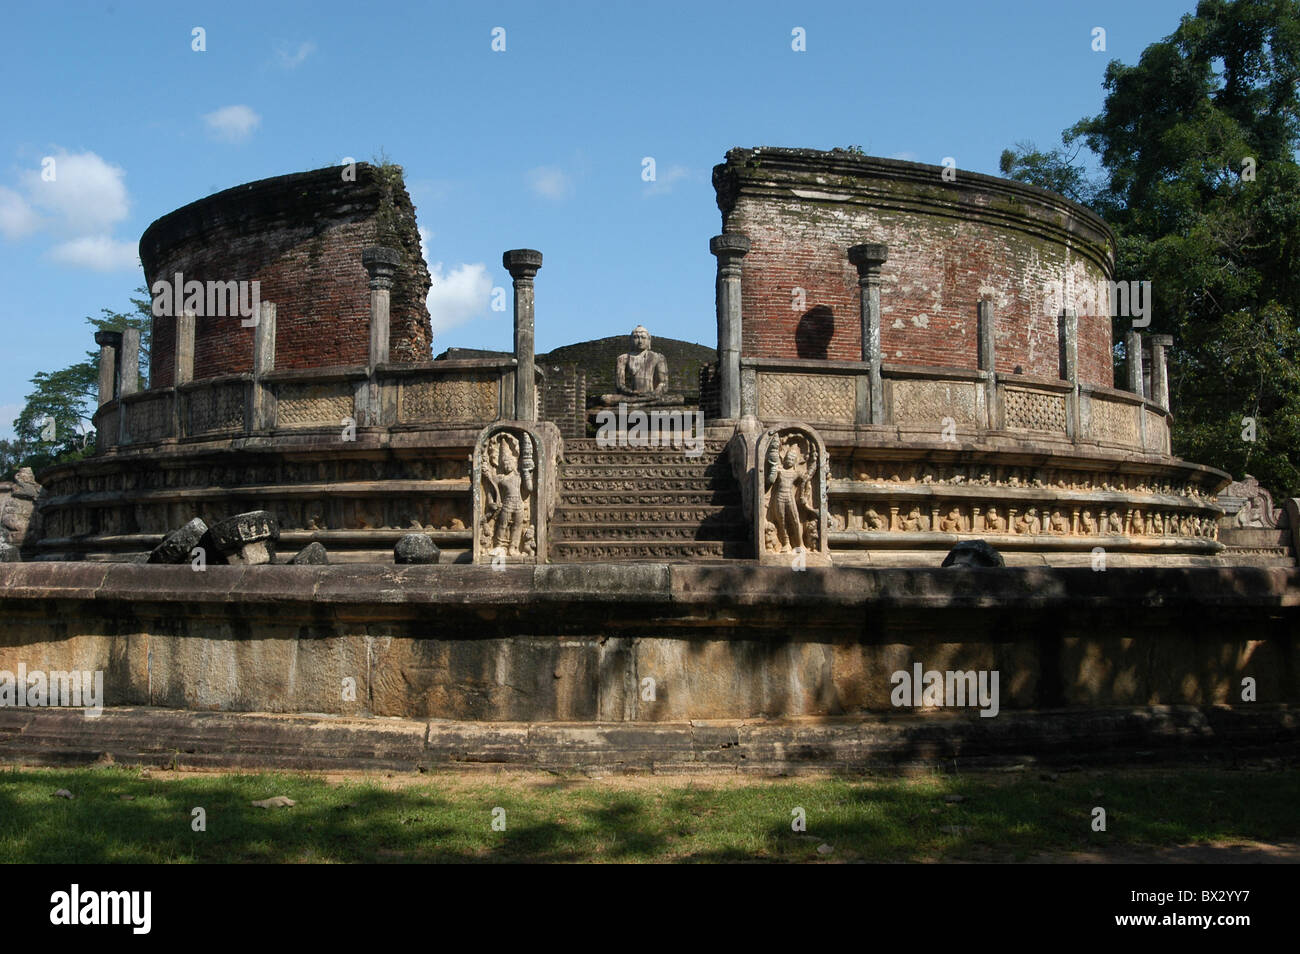 Sri Lanka Asien Polonnaruwa Vatadage Runde Tempel Viereck Tempel Buddha Kultur Ruinen Kulturstätte Buddh Stockfoto